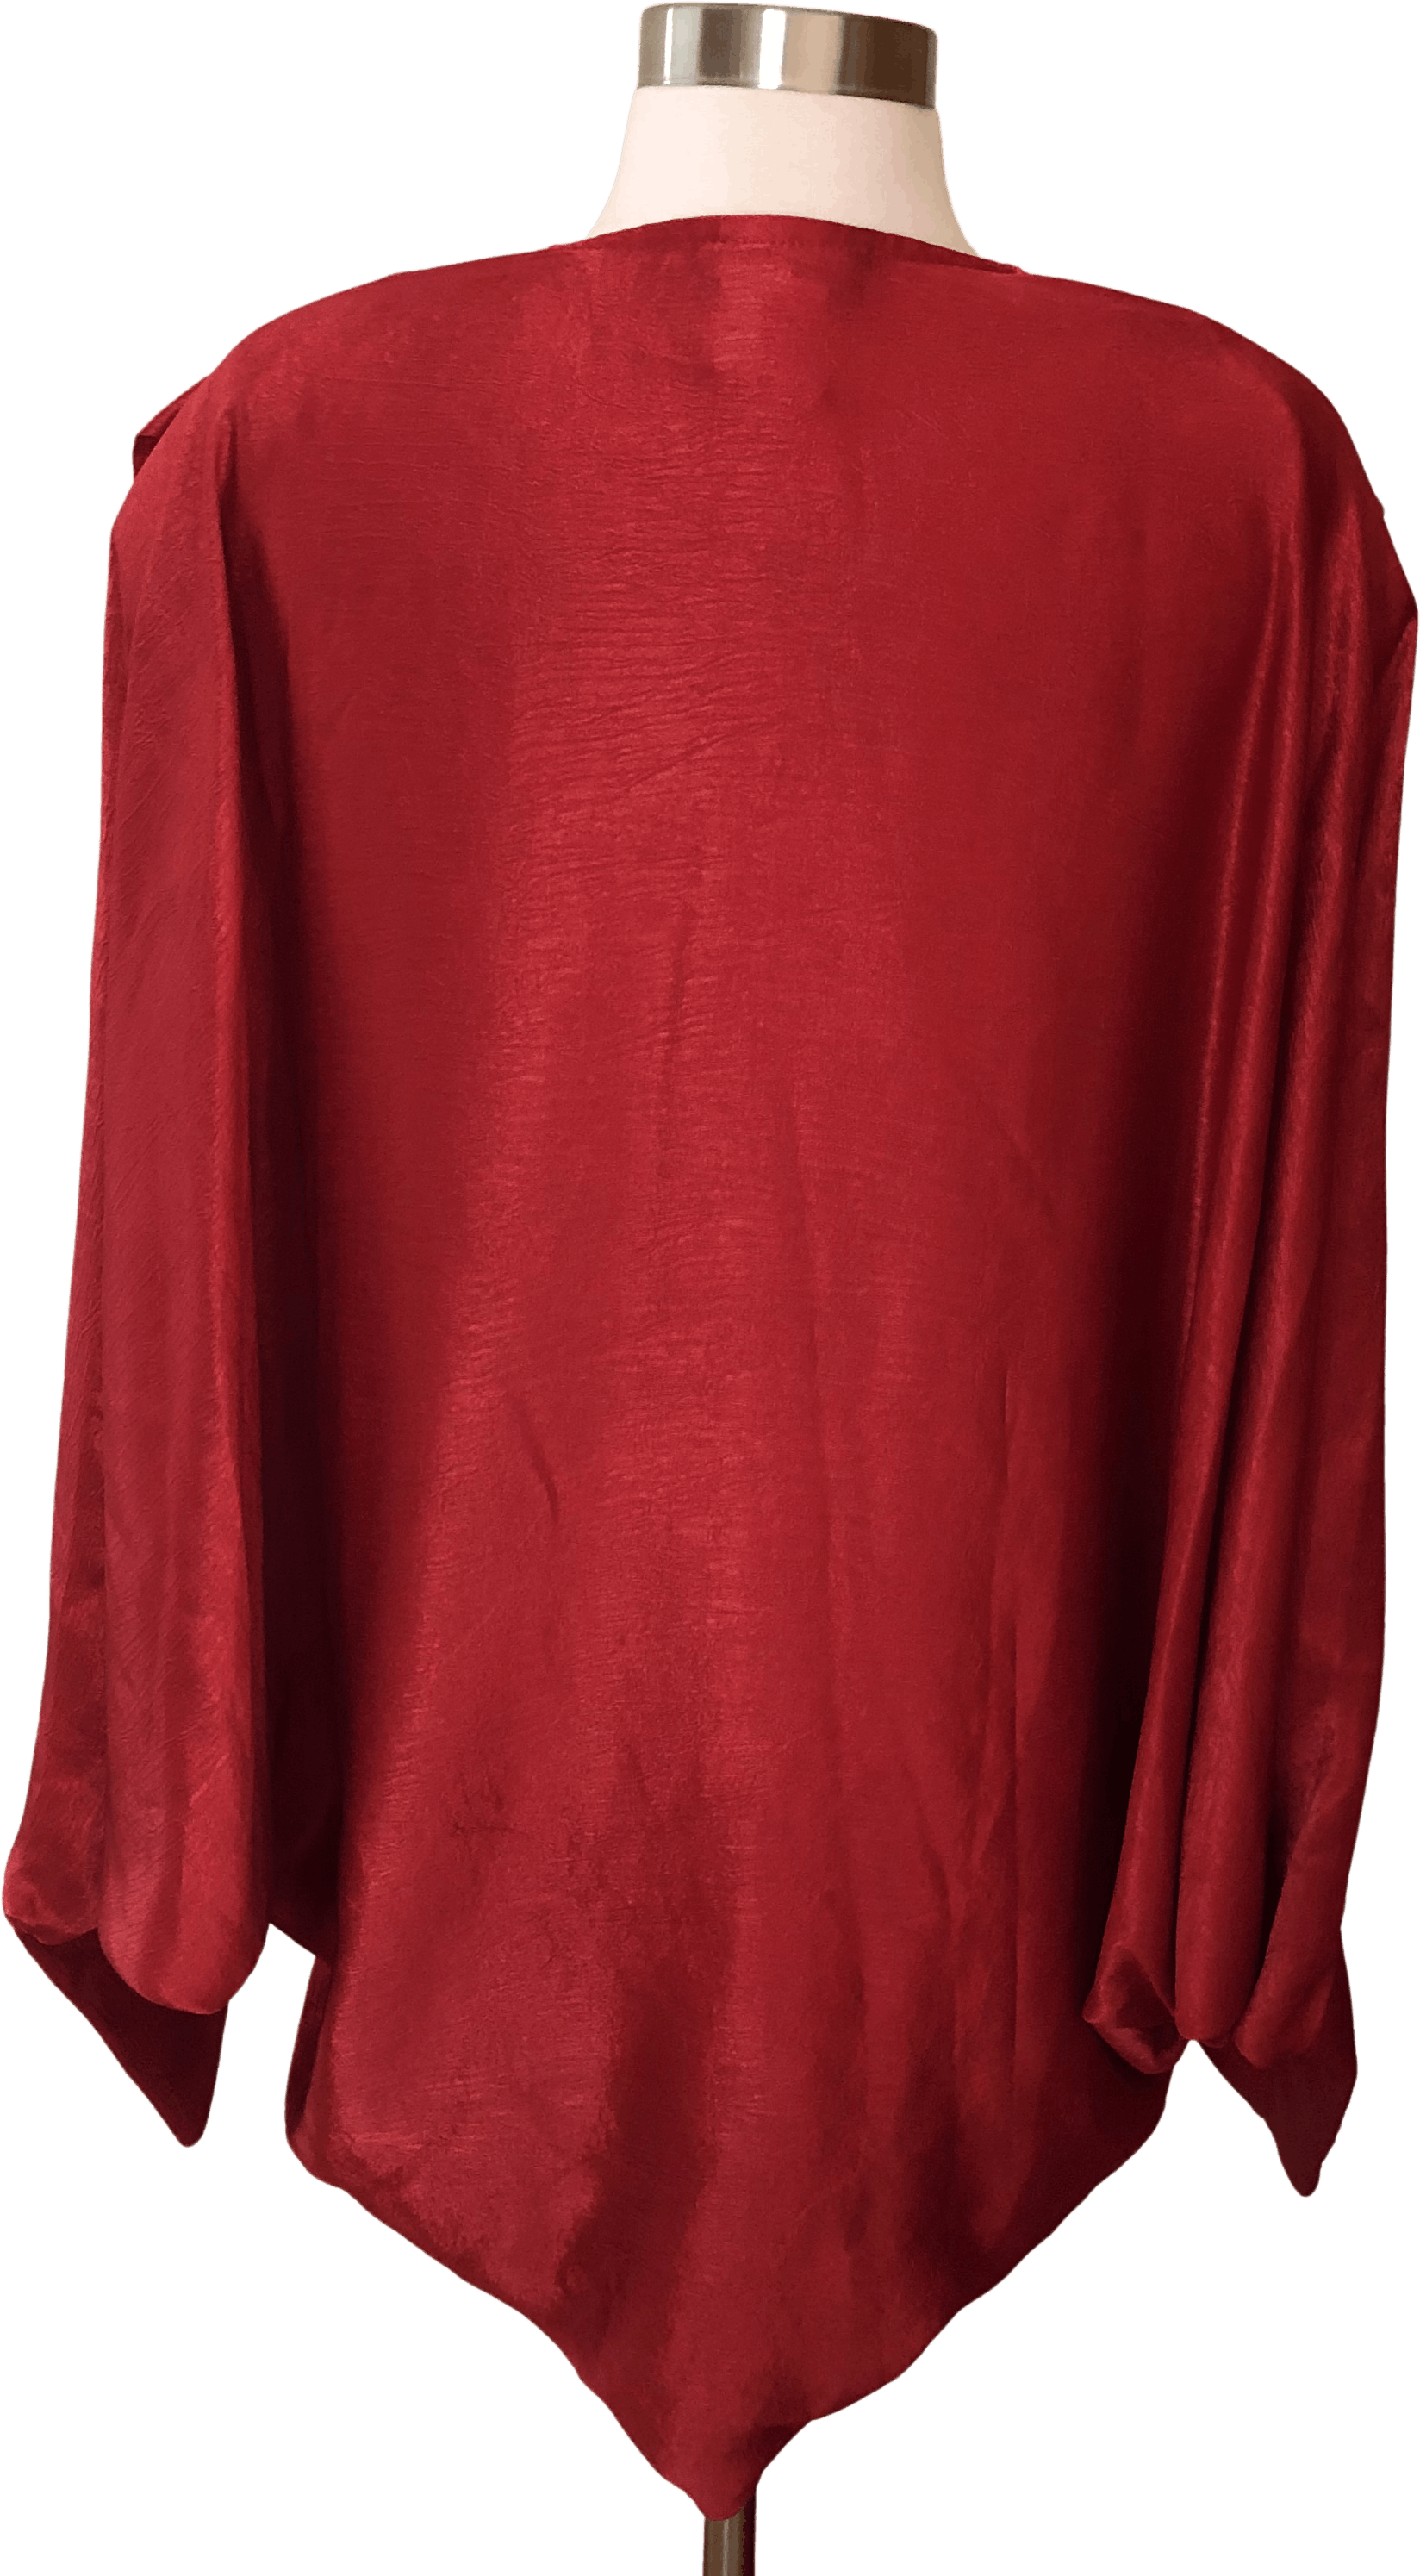 Vintage Shiny Red Robe by Samantha Black | Shop THRILLING